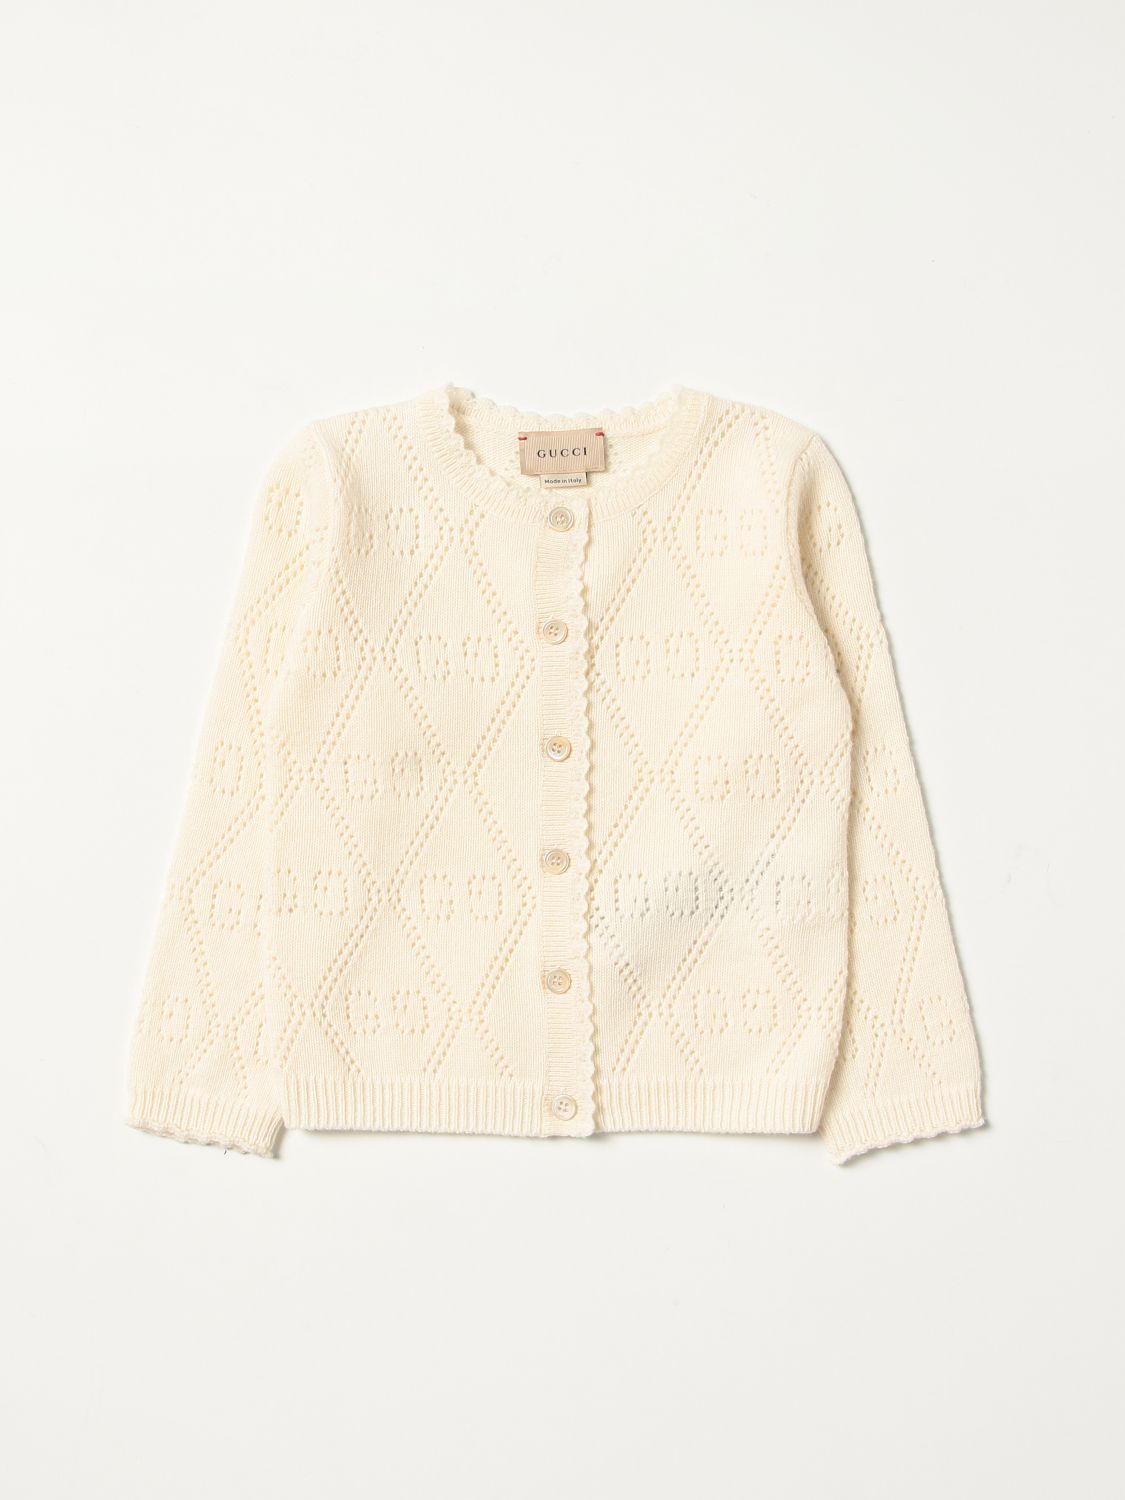 GUCCI: GG wool knit cardigan - White | Gucci sweater 642843XKBXP online ...